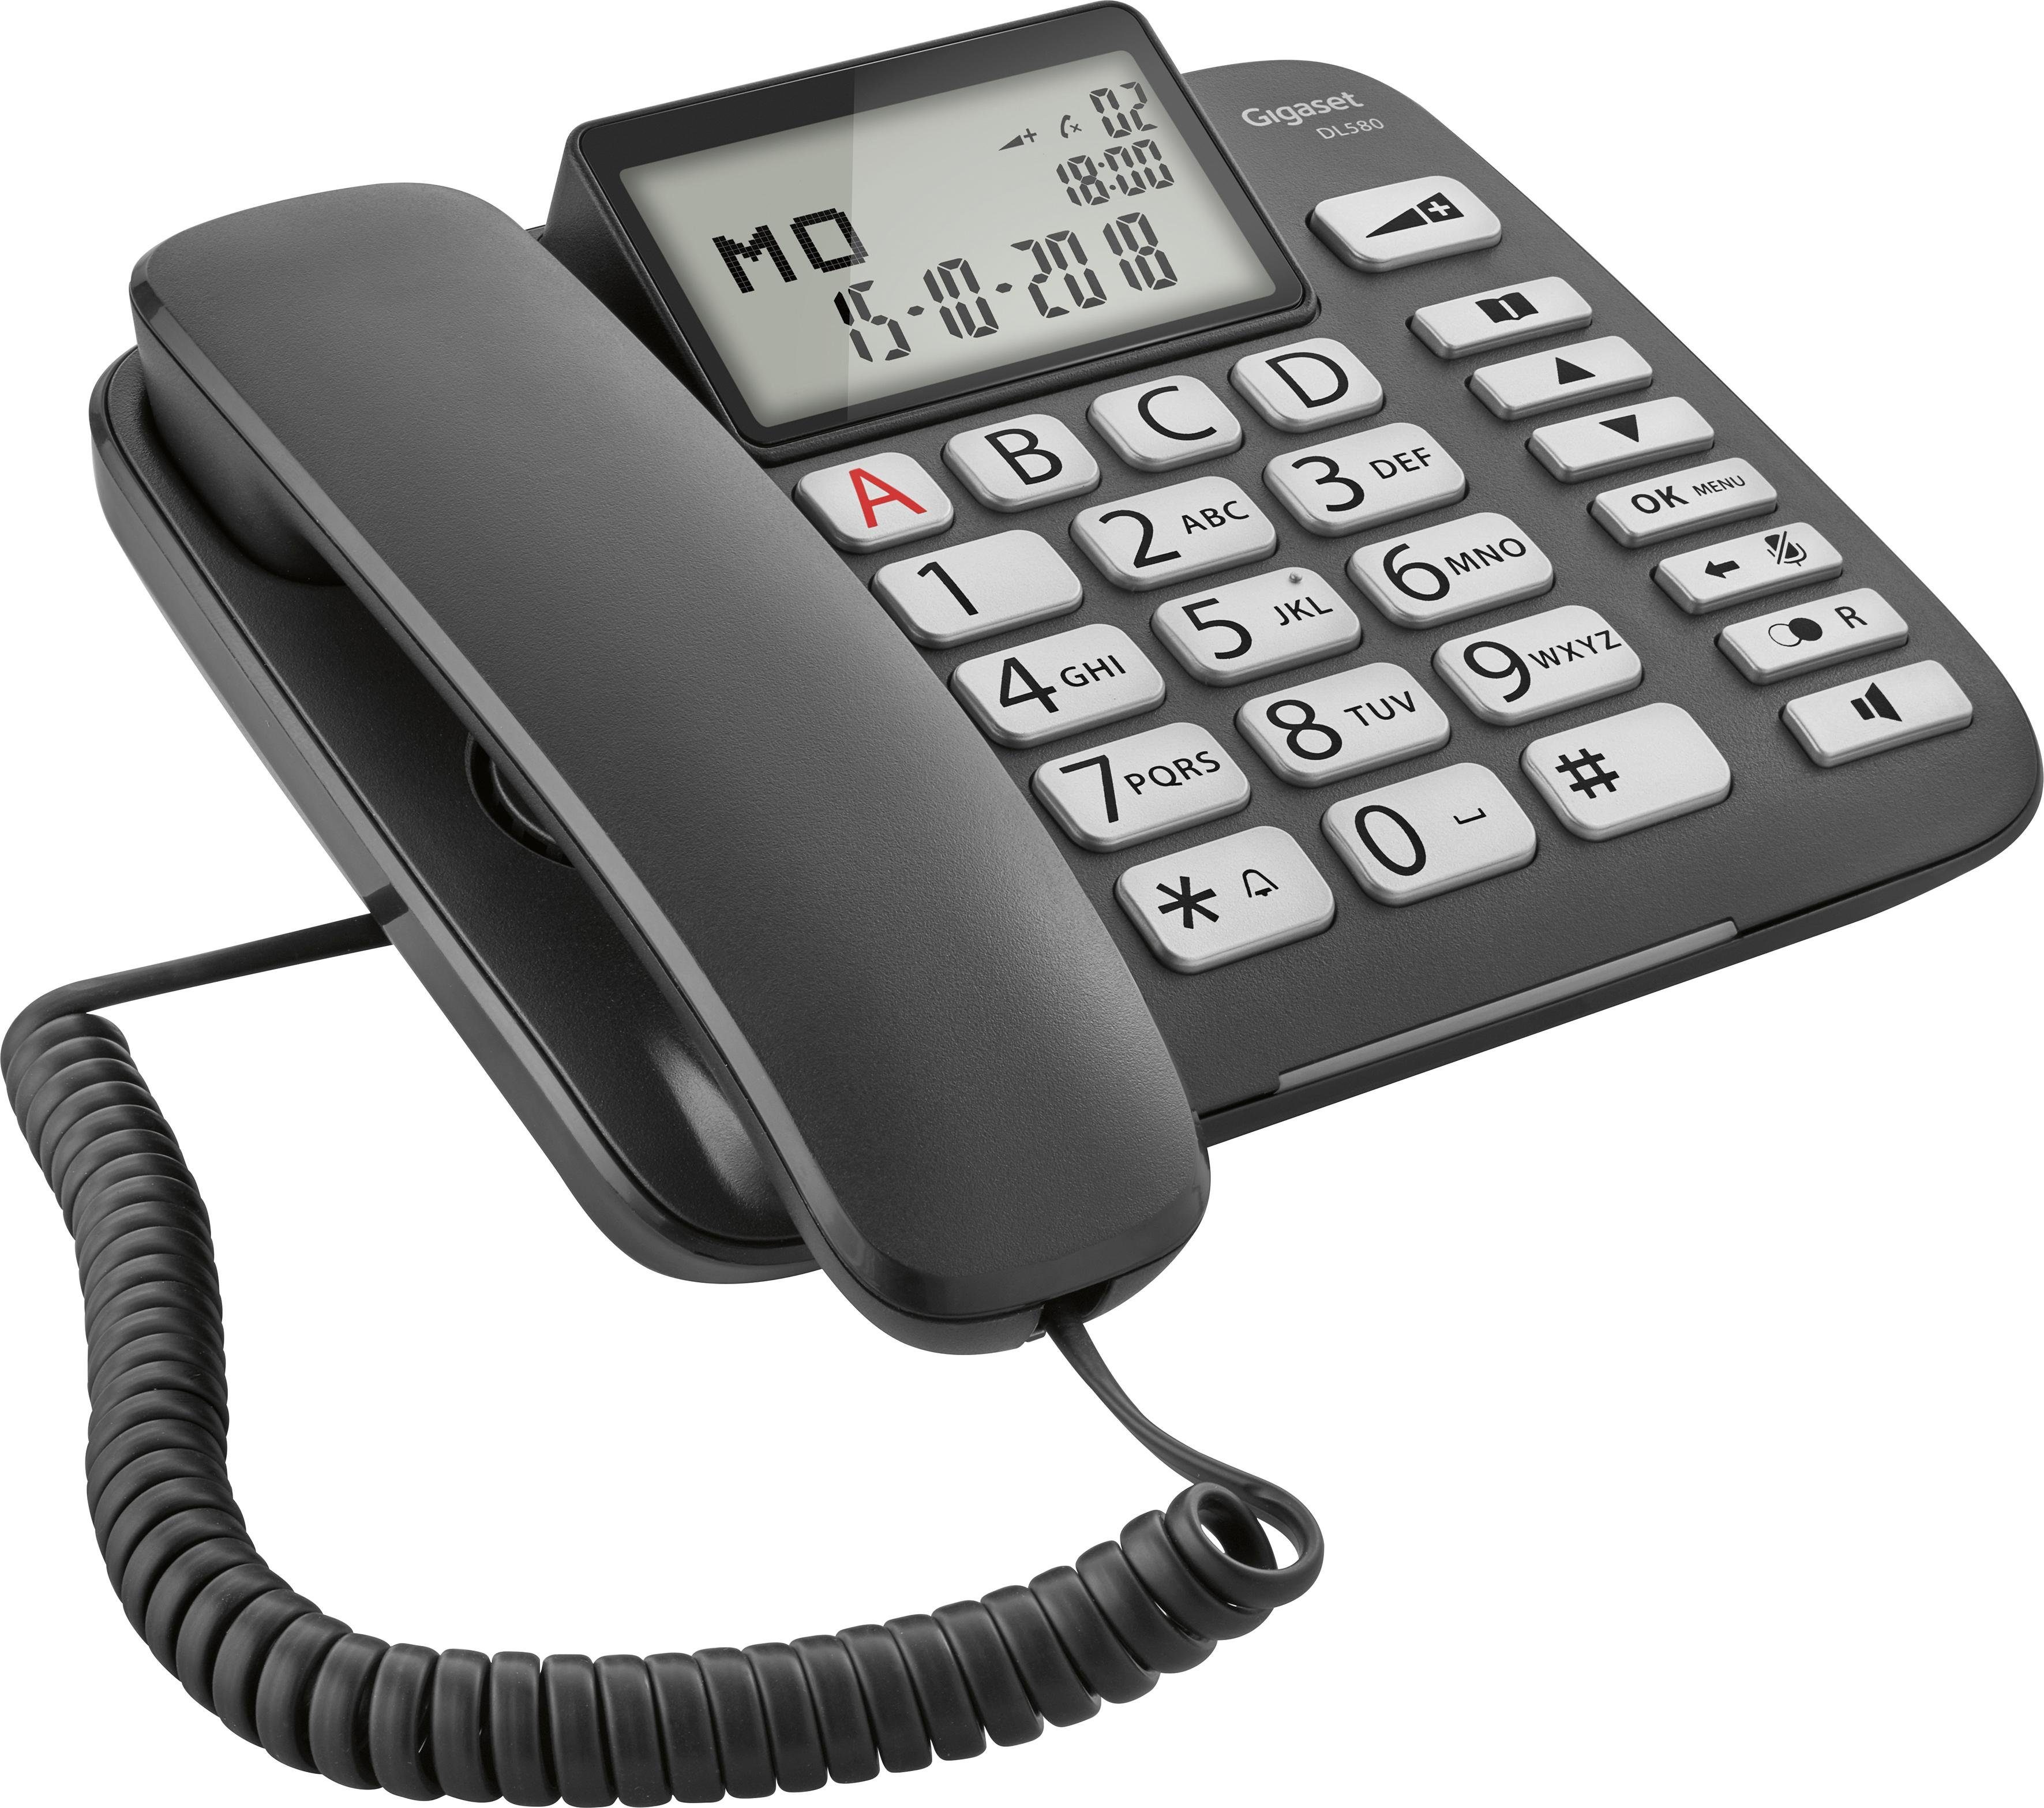 Gigaset »DL580« Großtastentelefon, KomfortTelefon mit